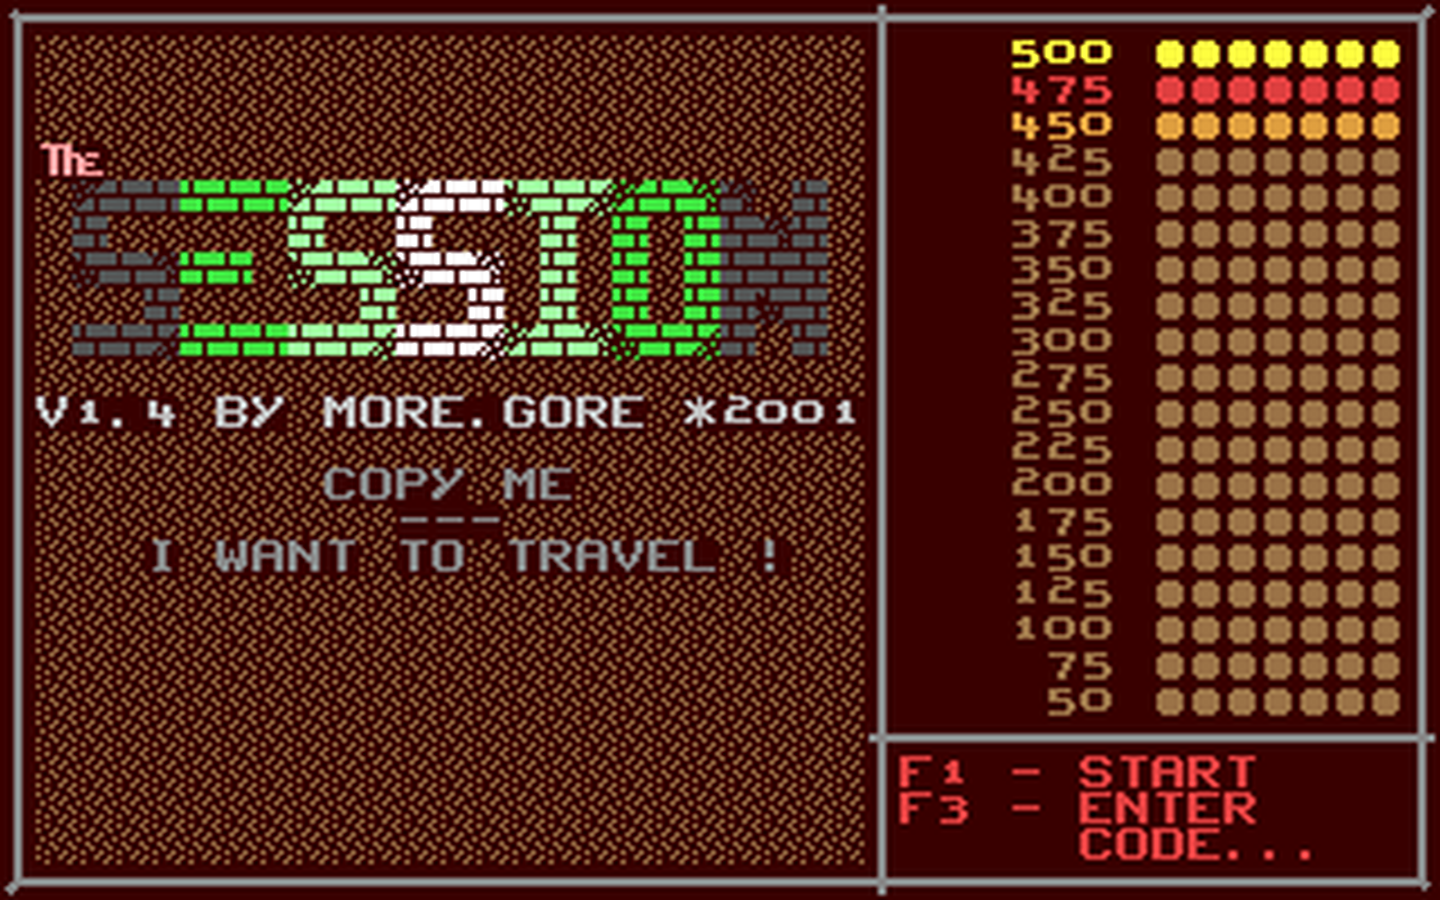 C64 GameBase Session_v1.4,_The More.Gore_Software 2001